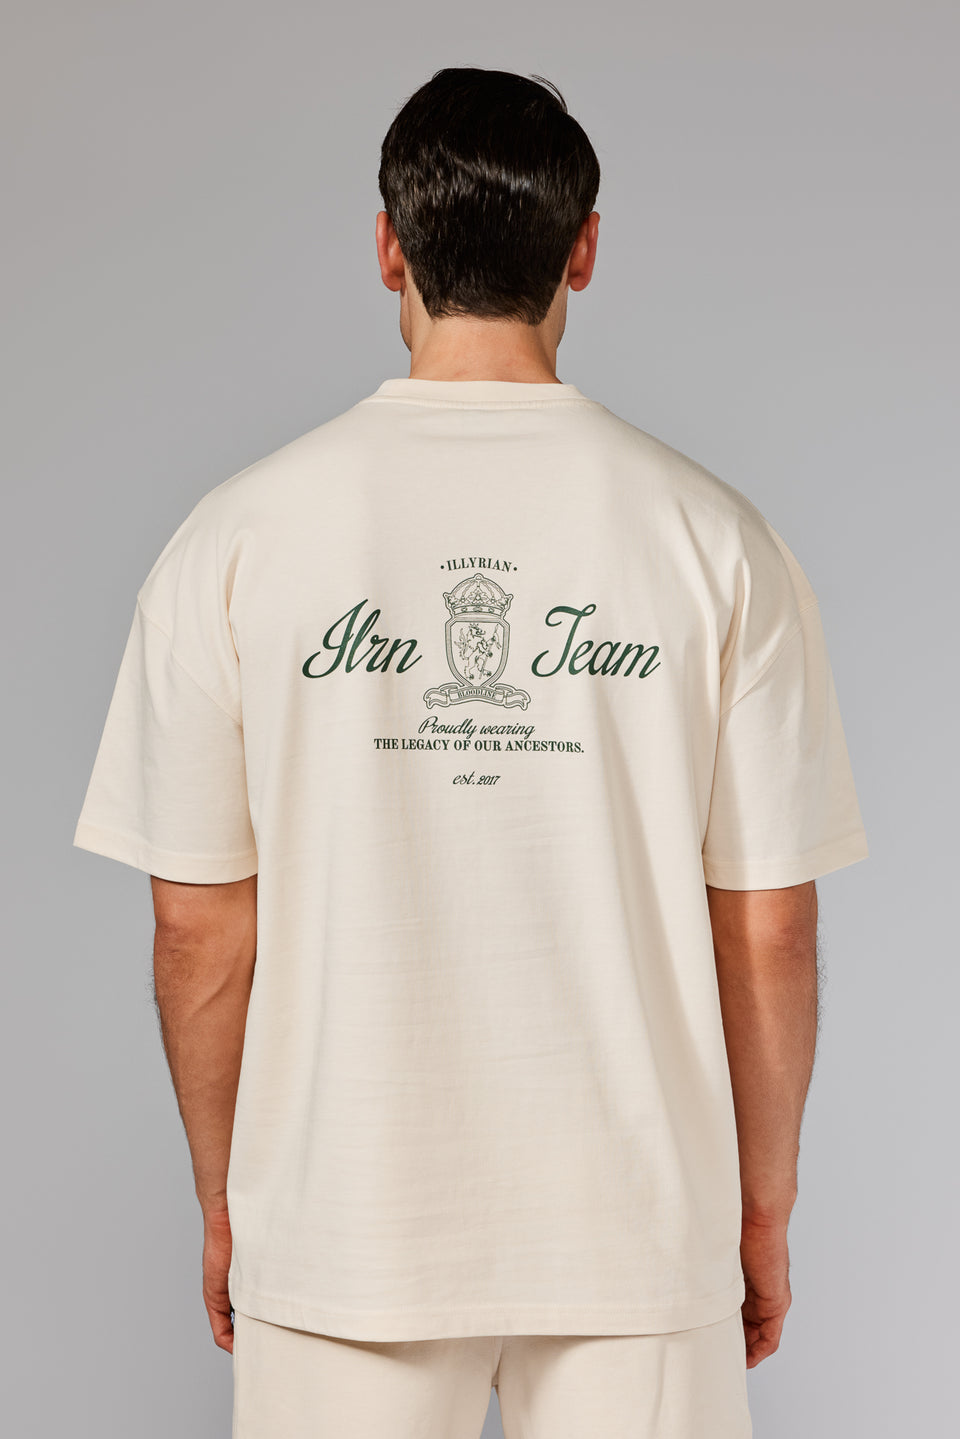 ILRN Team T-Shirt